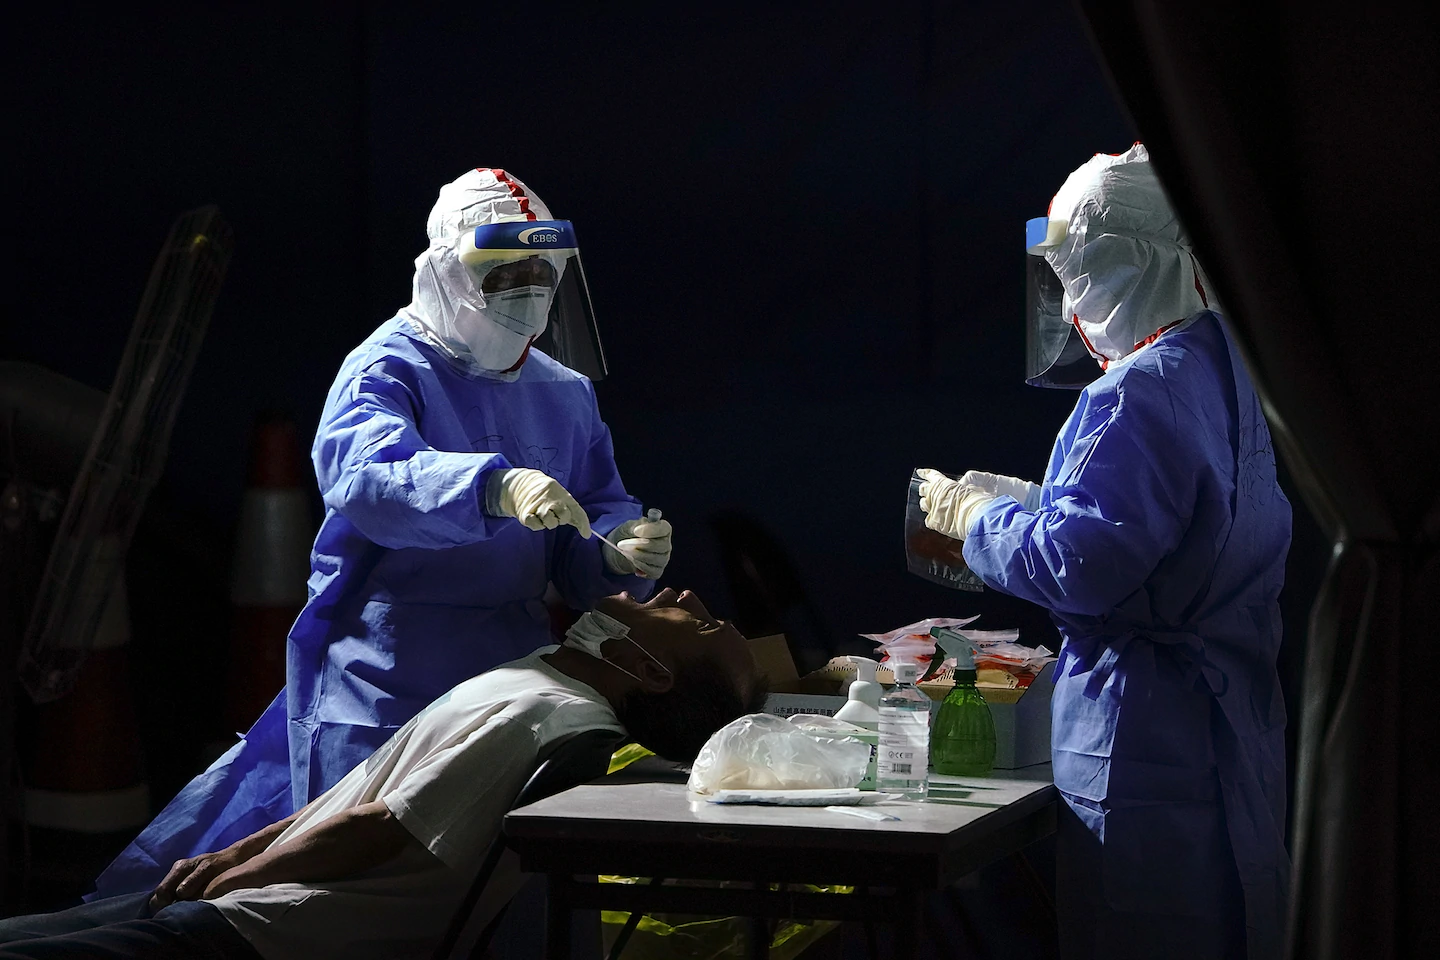 Beijing coronavirus outbreak: The pandemic's spread is far from over